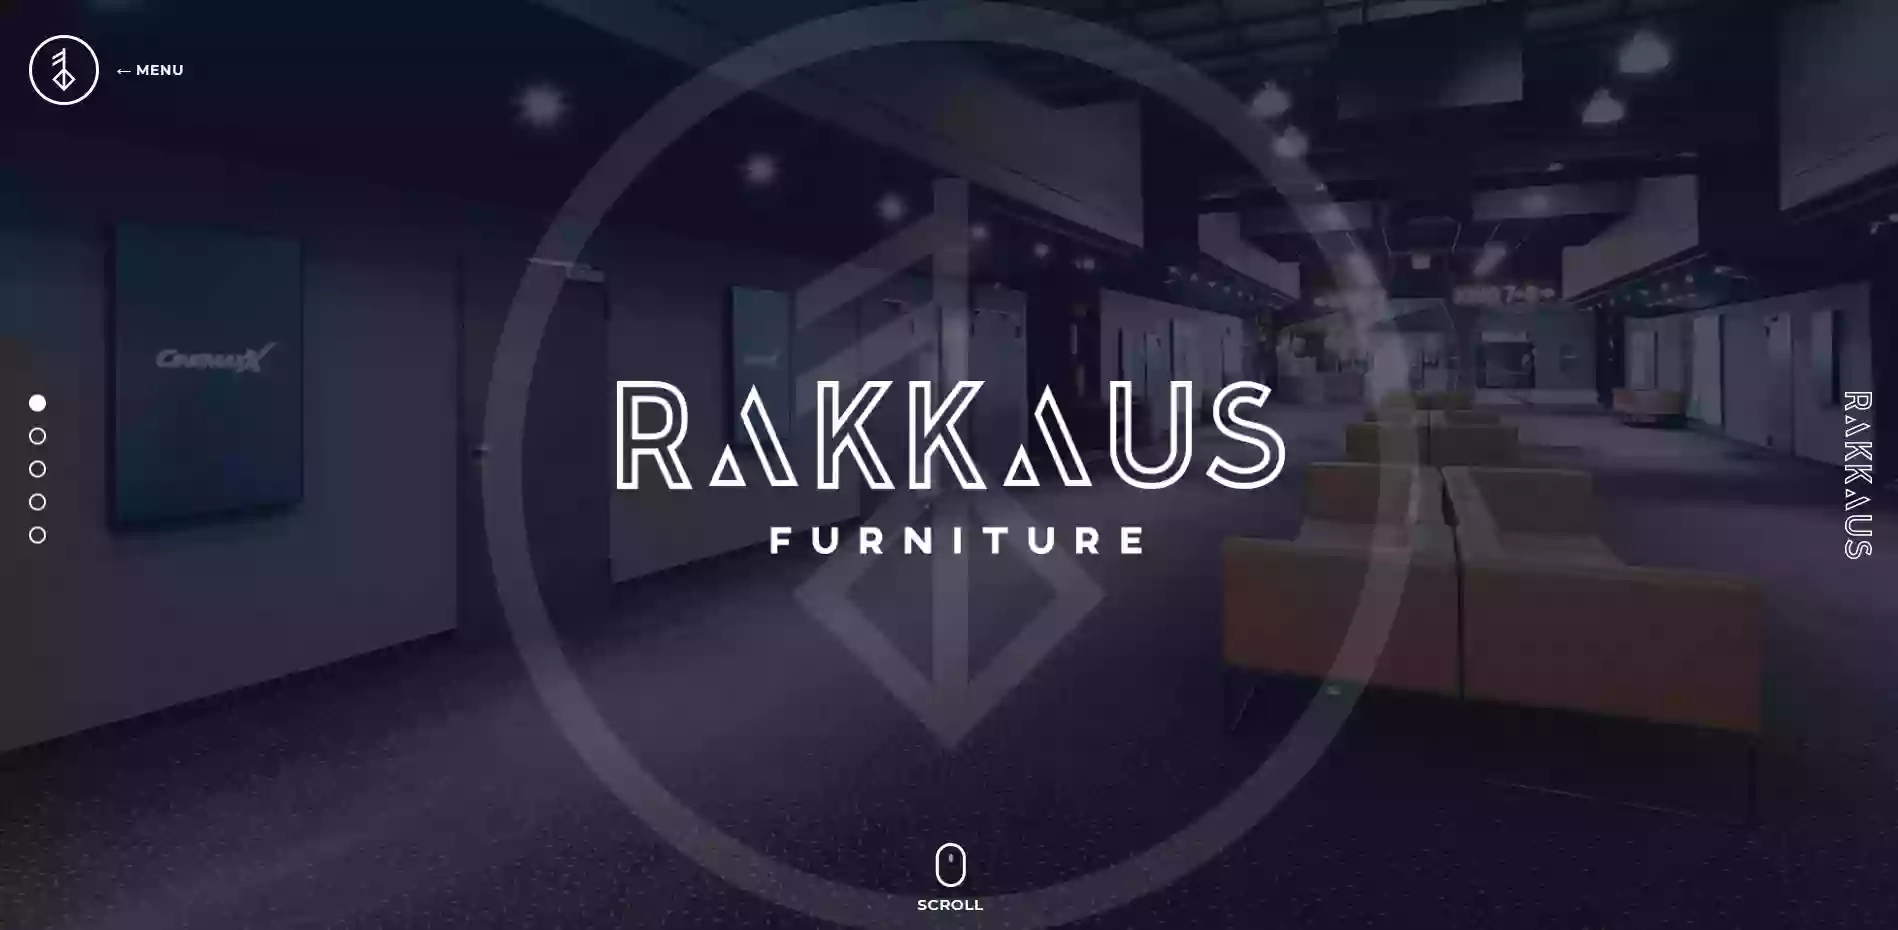 Rakkaus Furniture Ltd